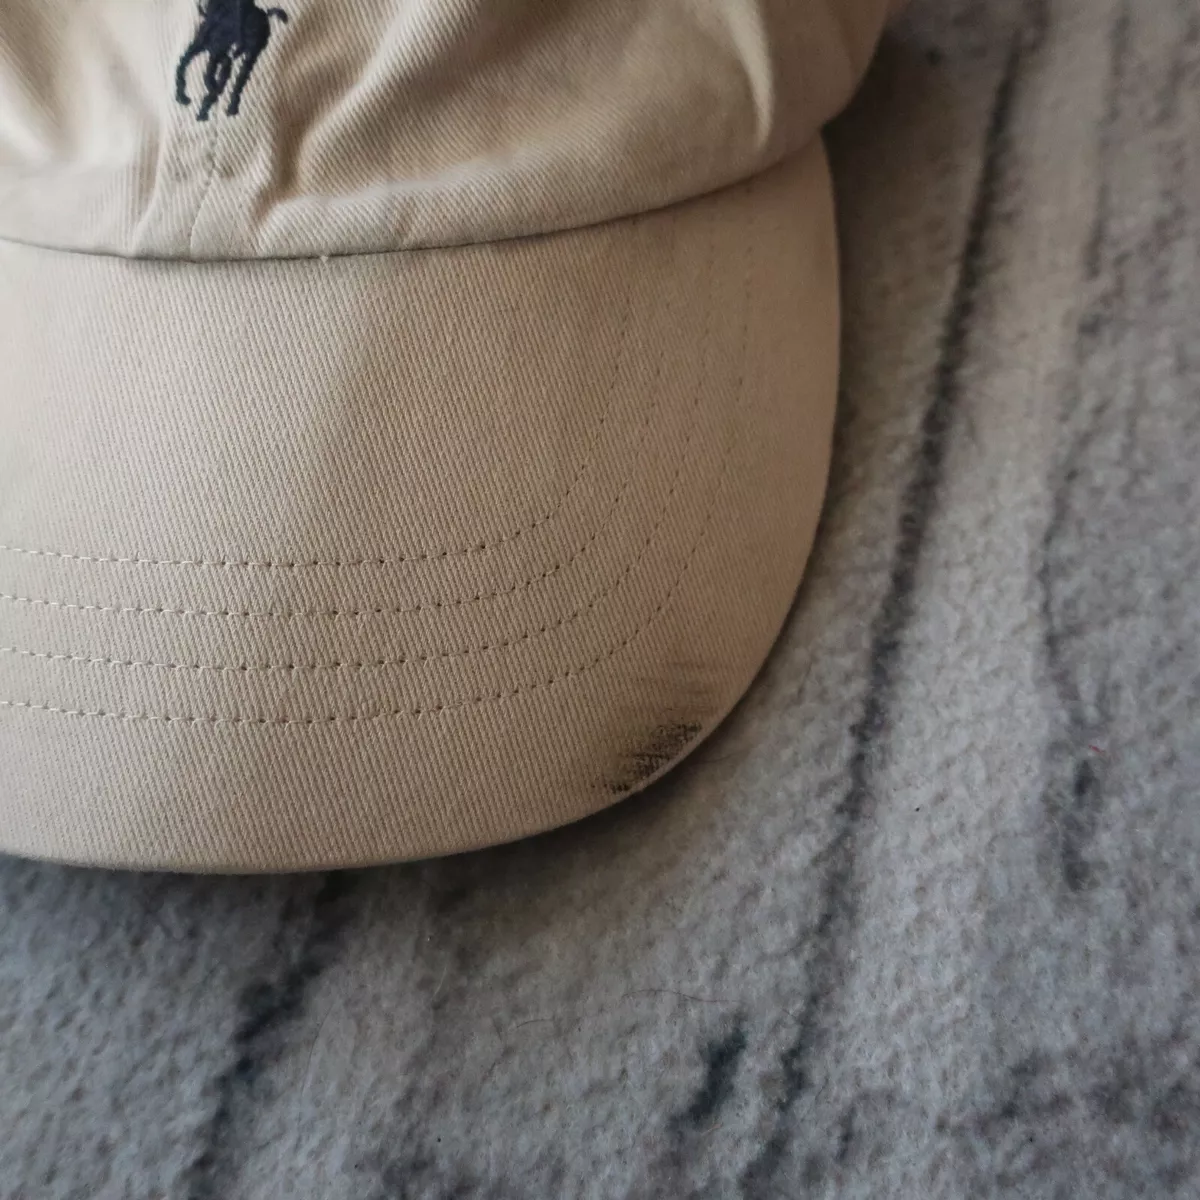 eBay Lauren Cap Ralph Hat Polo Distressed Tan Pony Strapback | Leather Logo Vintage